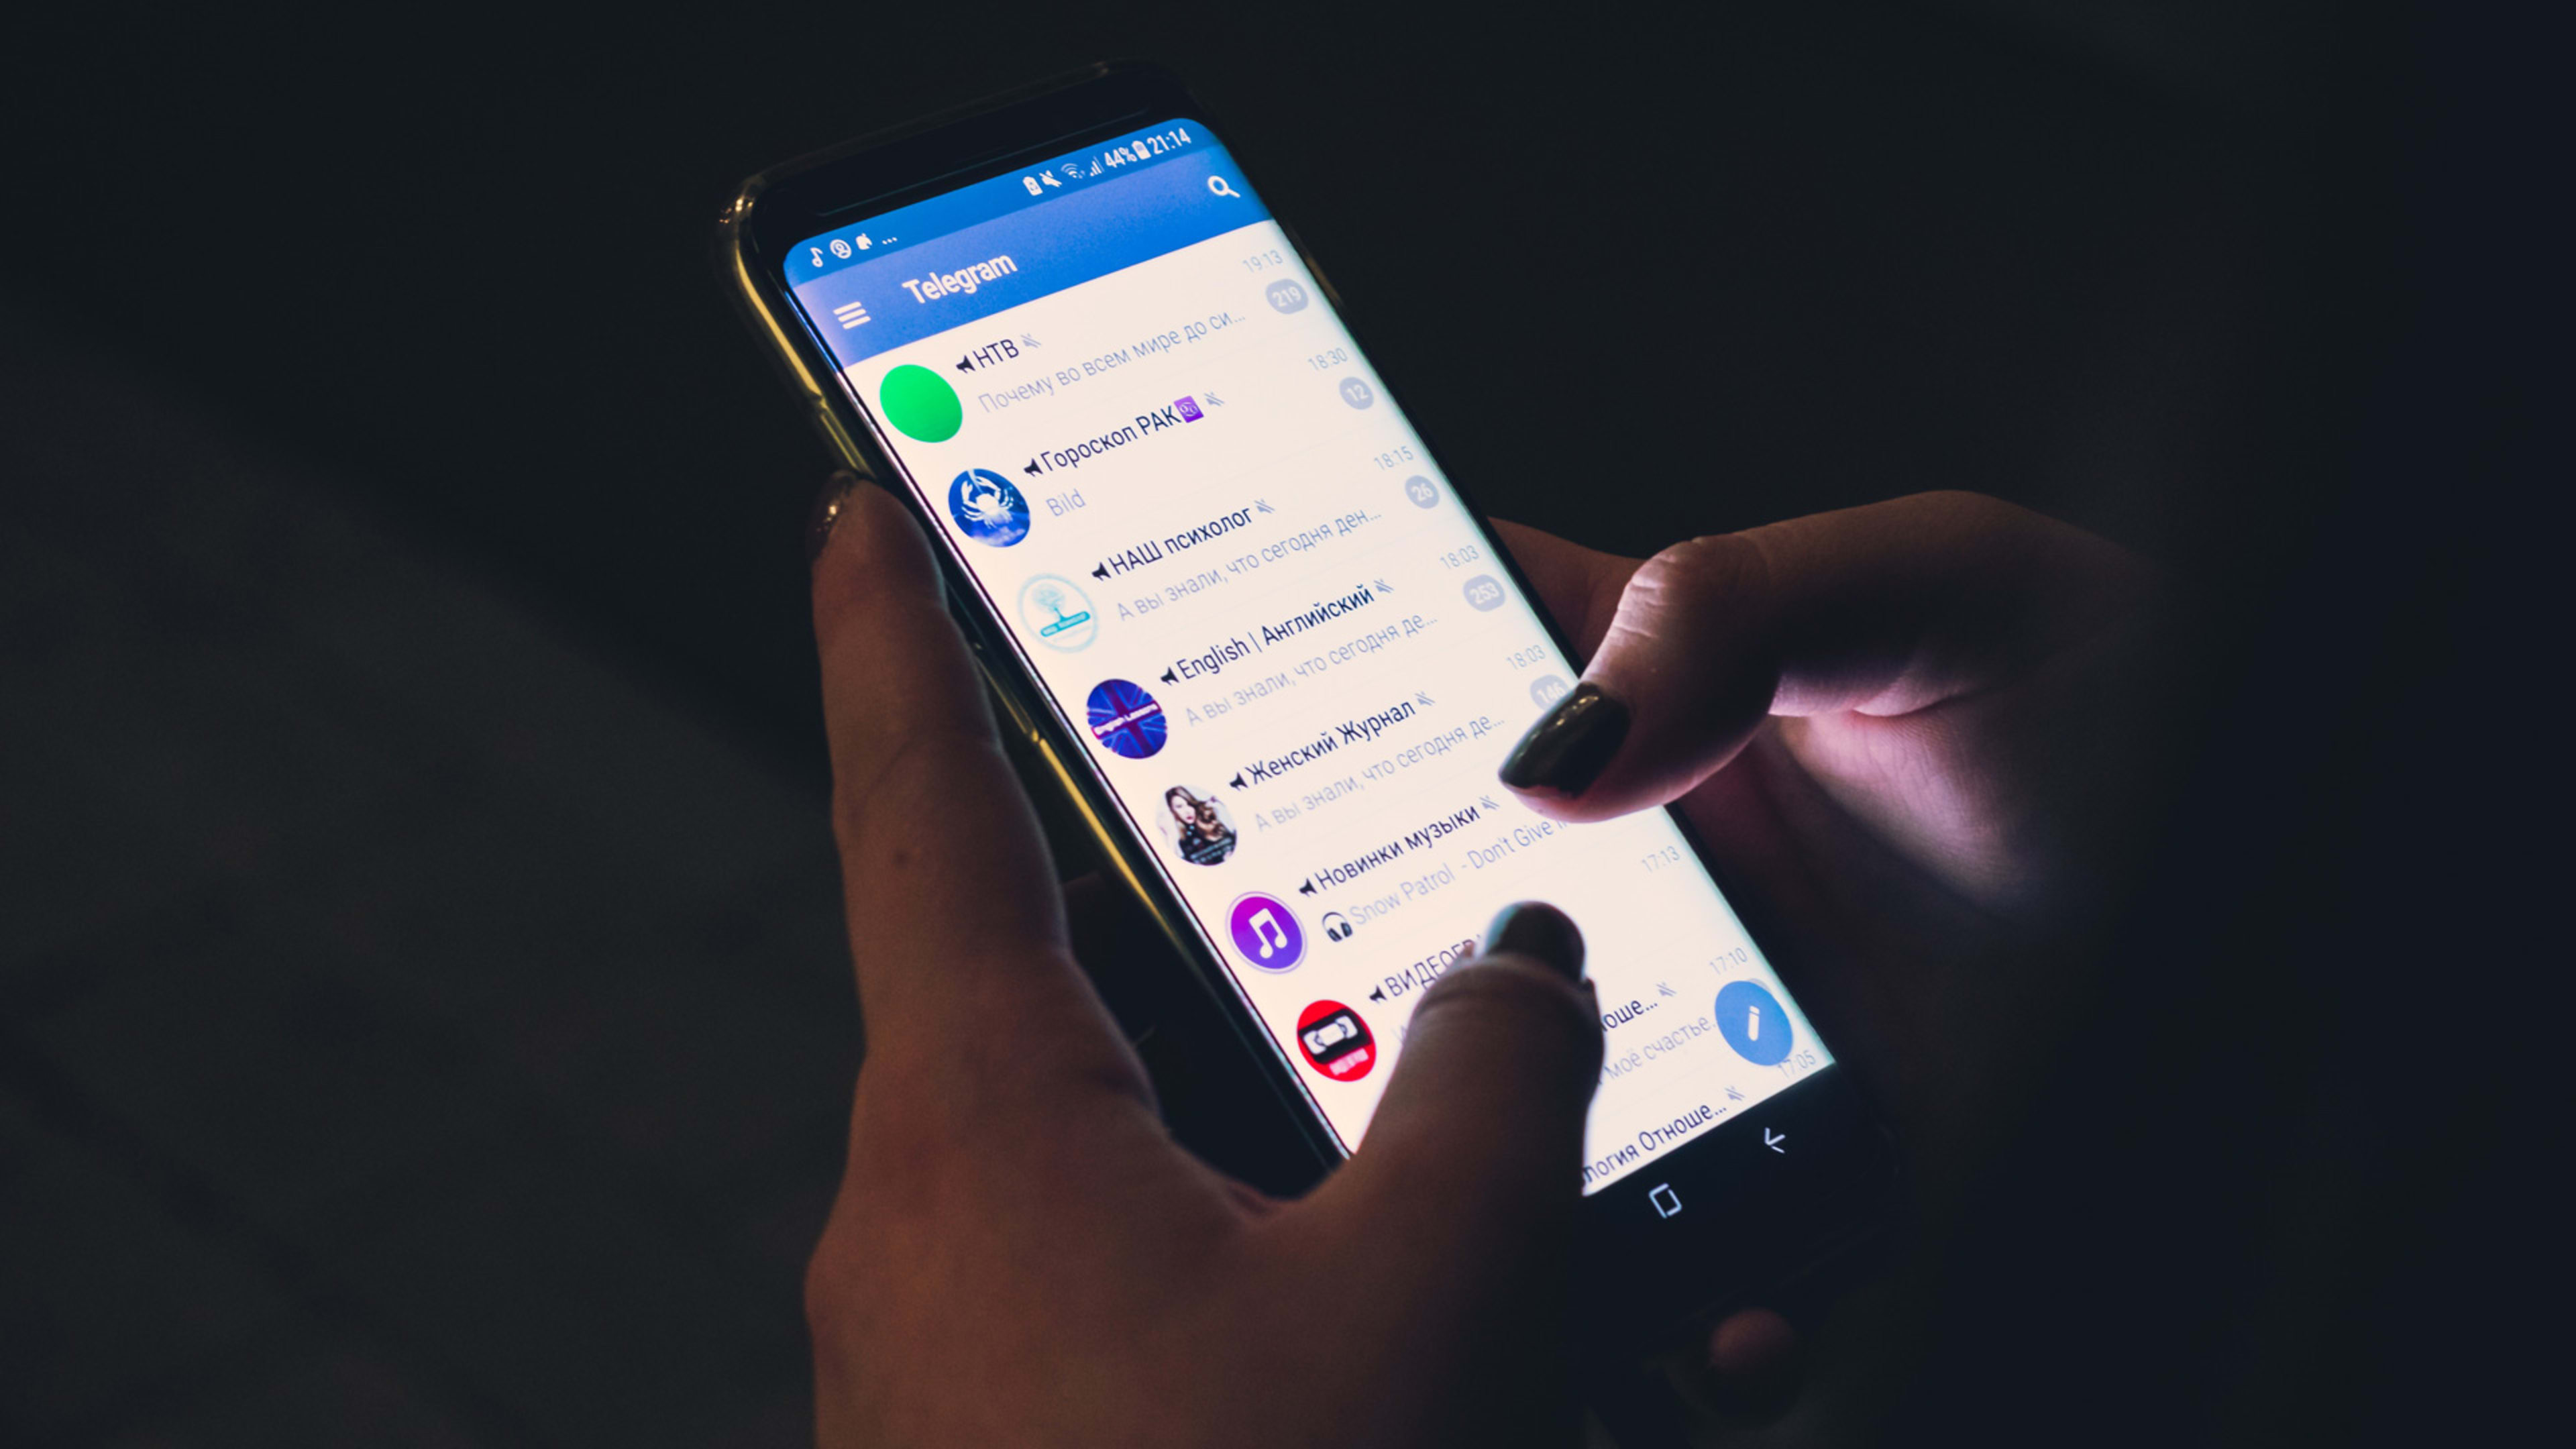 Russian court orders ban on secure messaging app Telegram